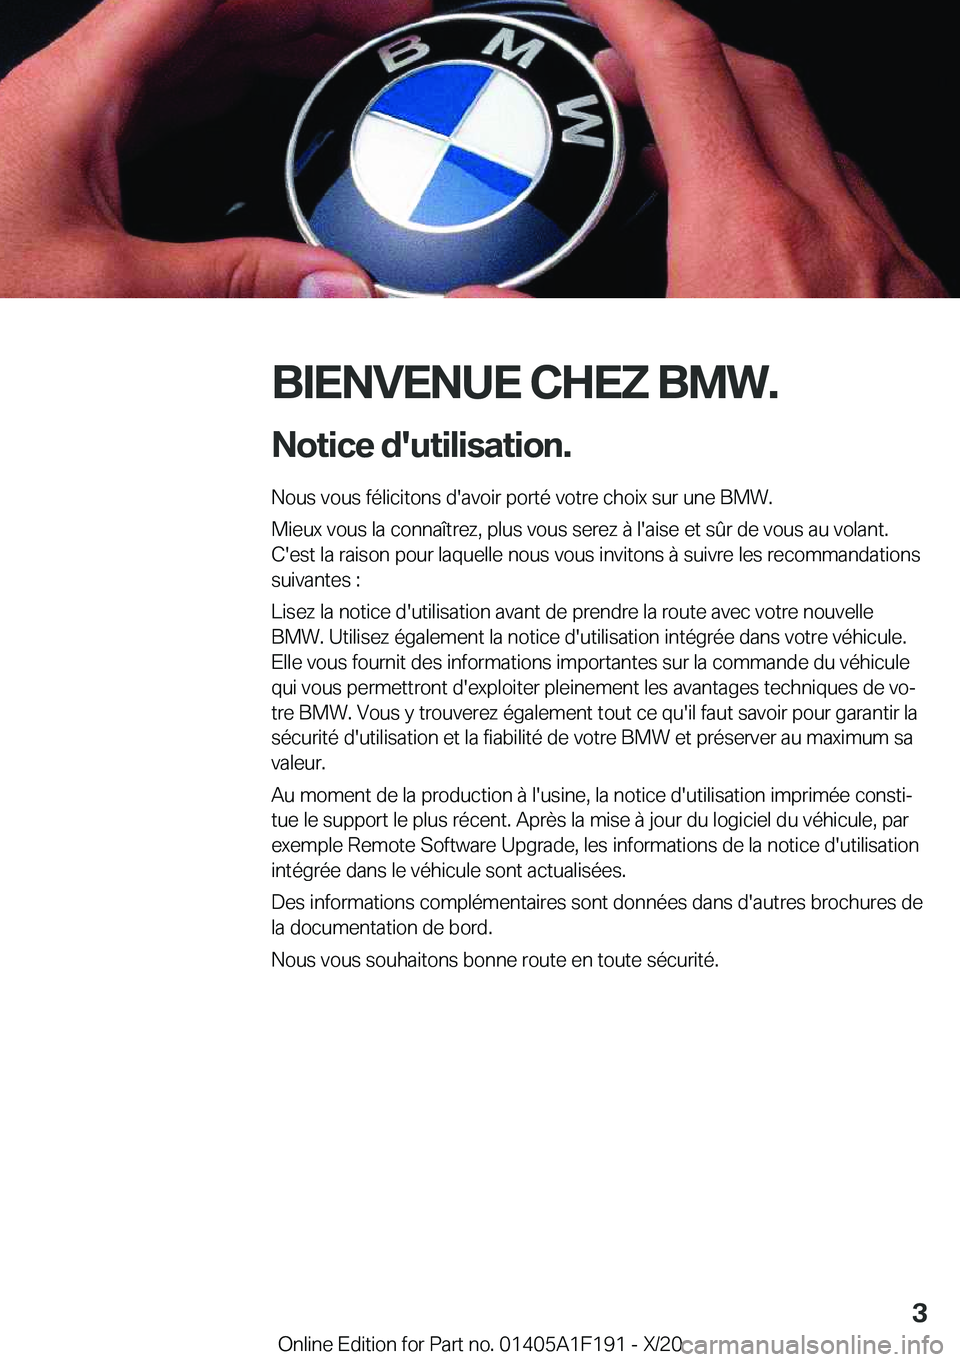 BMW M5 2021  Notices Demploi (in French) �B�I�E�N�V�E�N�U�E��C�H�E�Z��B�M�W�.�N�o�t�i�c�e��d�'�u�t�i�l�i�s�a�t�i�o�n�.
�N�o�u�s��v�o�u�s��f�é�l�i�c�i�t�o�n�s��d�'�a�v�o�i�r��p�o�r�t�é��v�o�t�r�e��c�h�o�i�x��s�u�r��u�n�e�